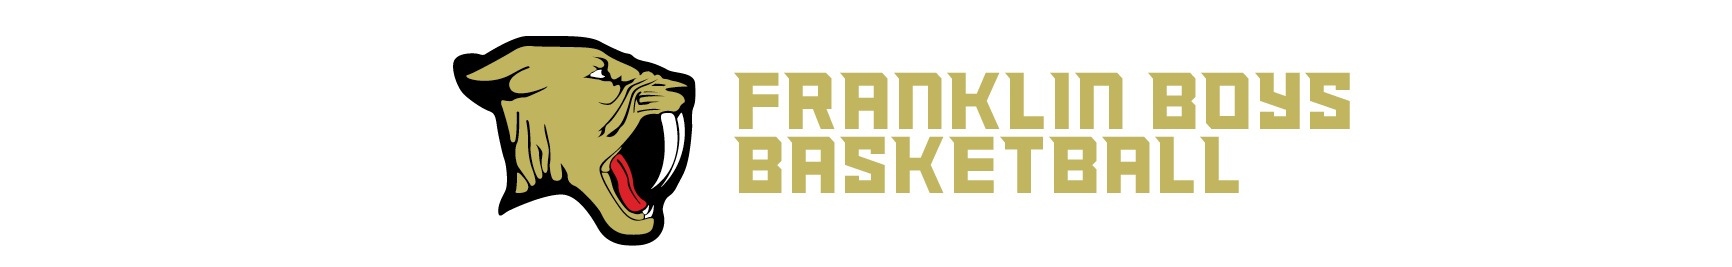 Franklin Boys Basketball